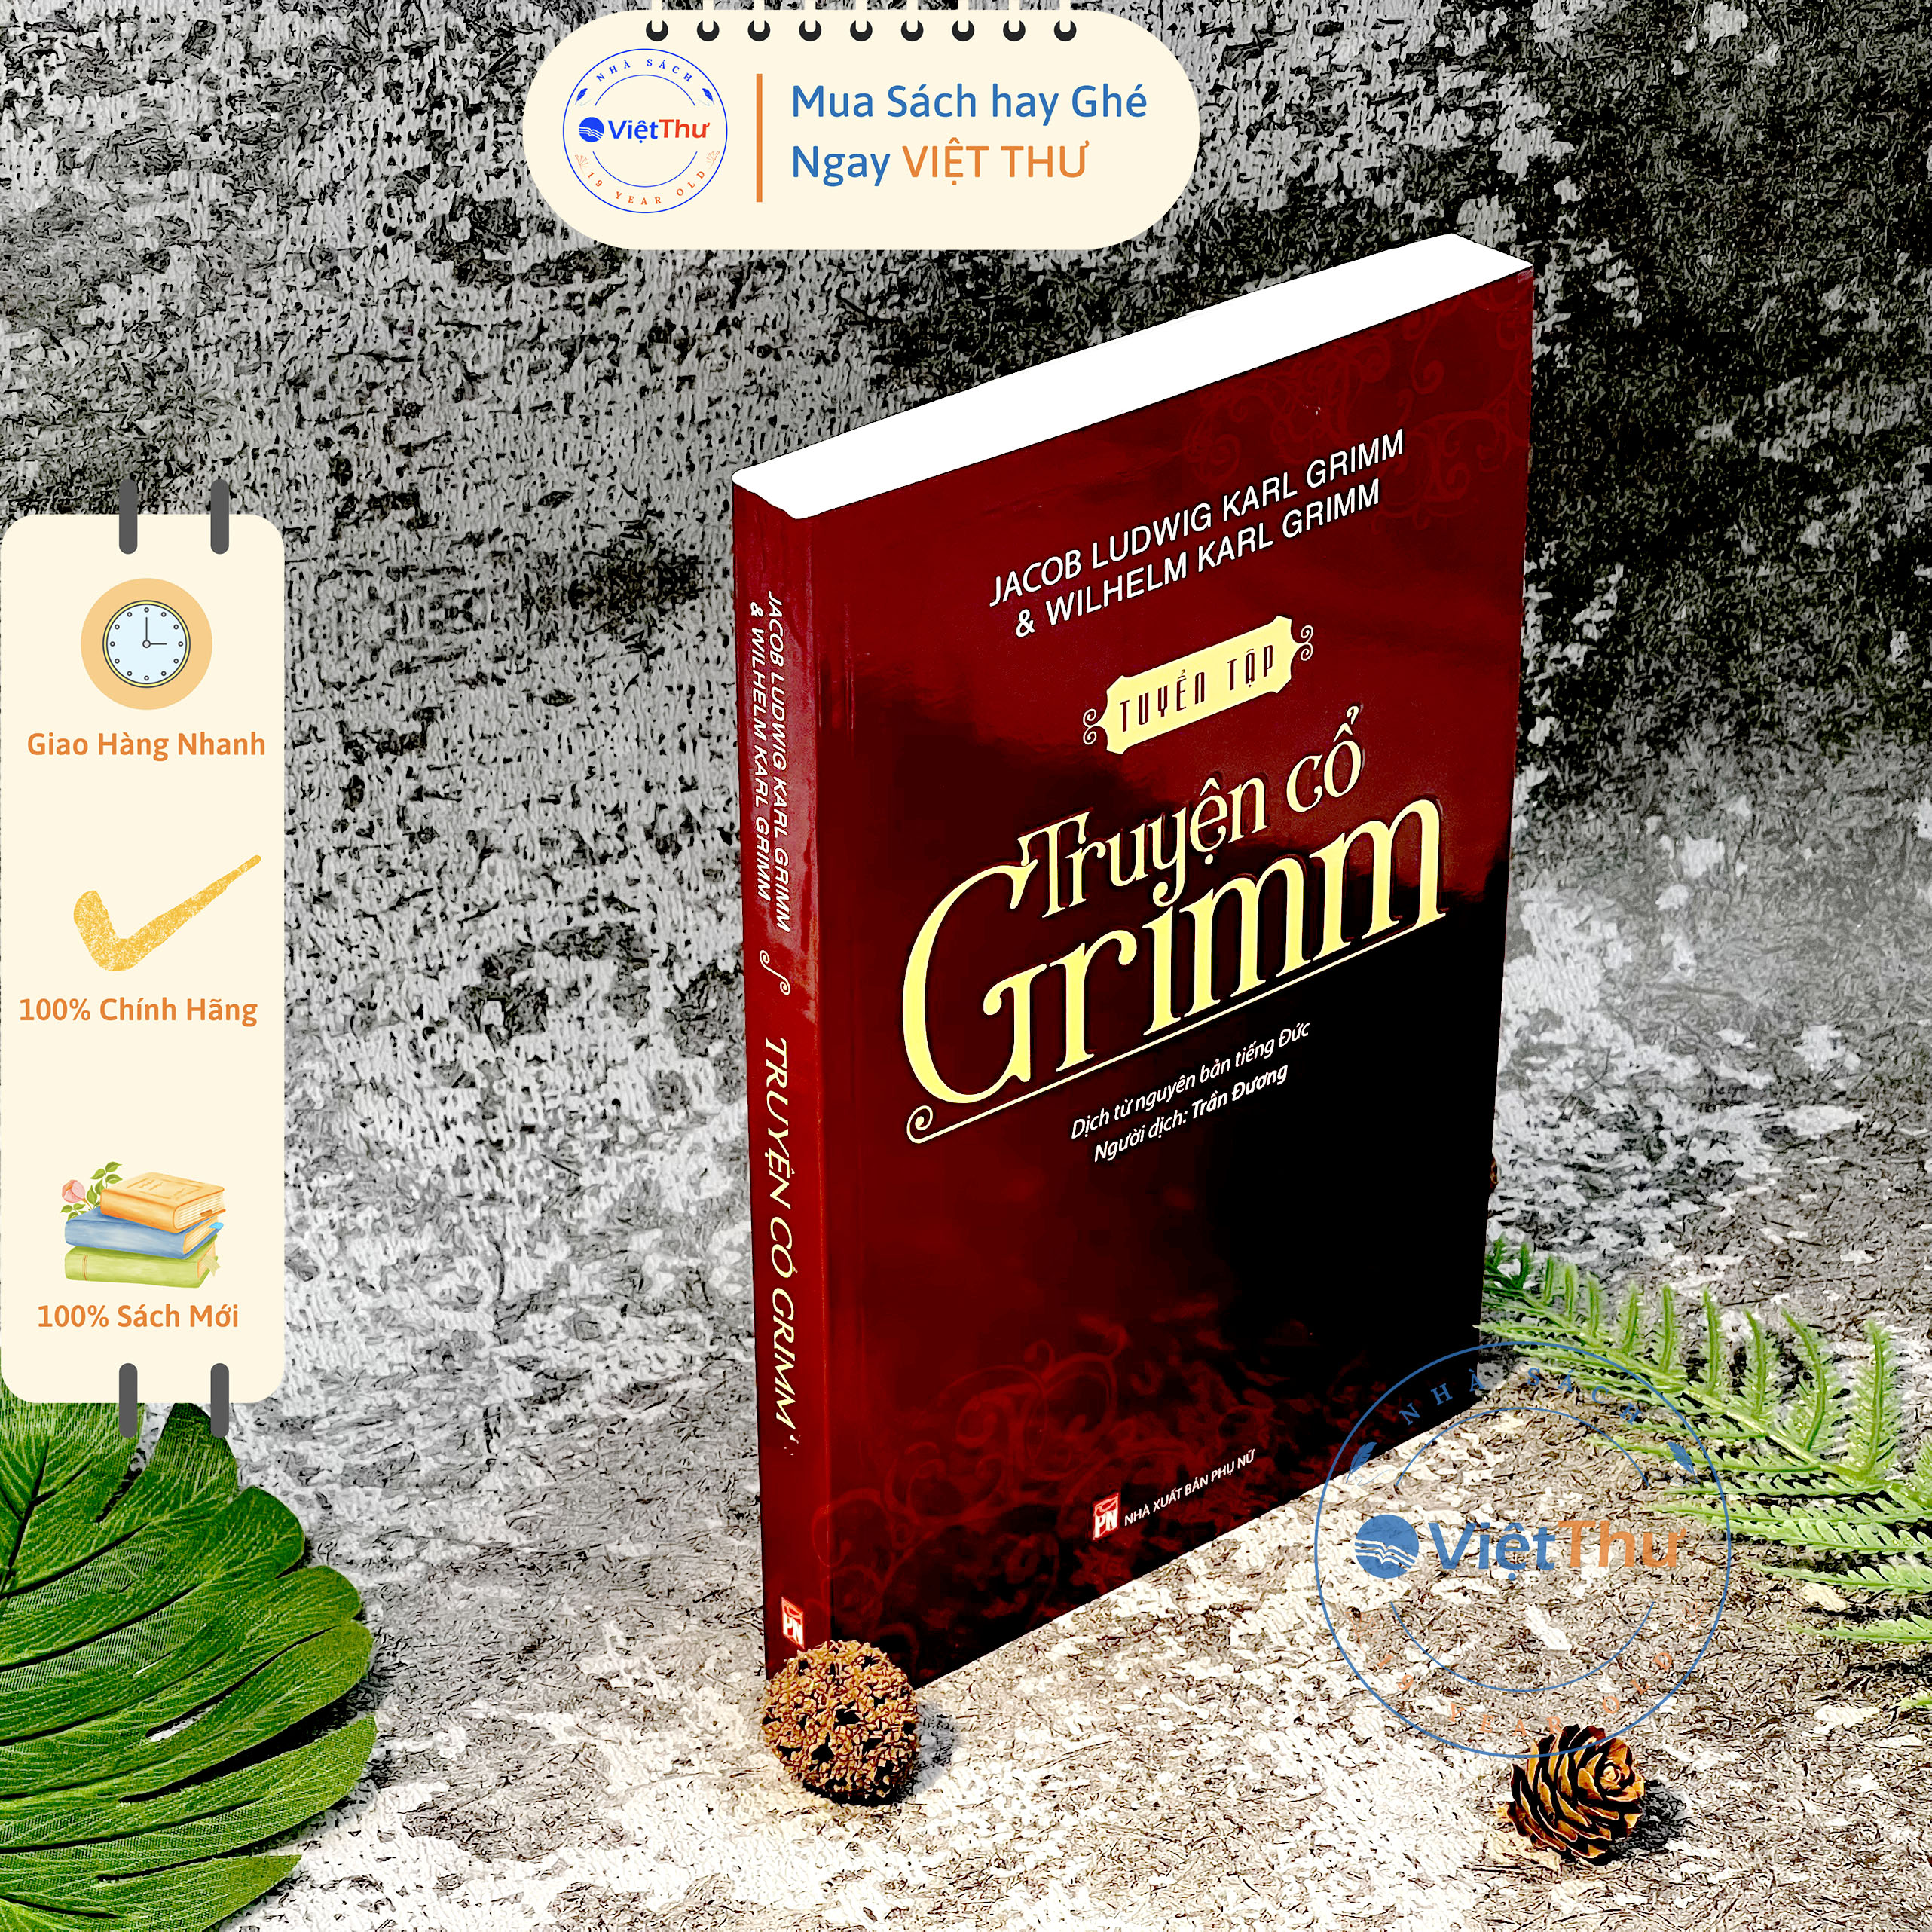 Truyện Cổ Grimm (Tuyển Tập)